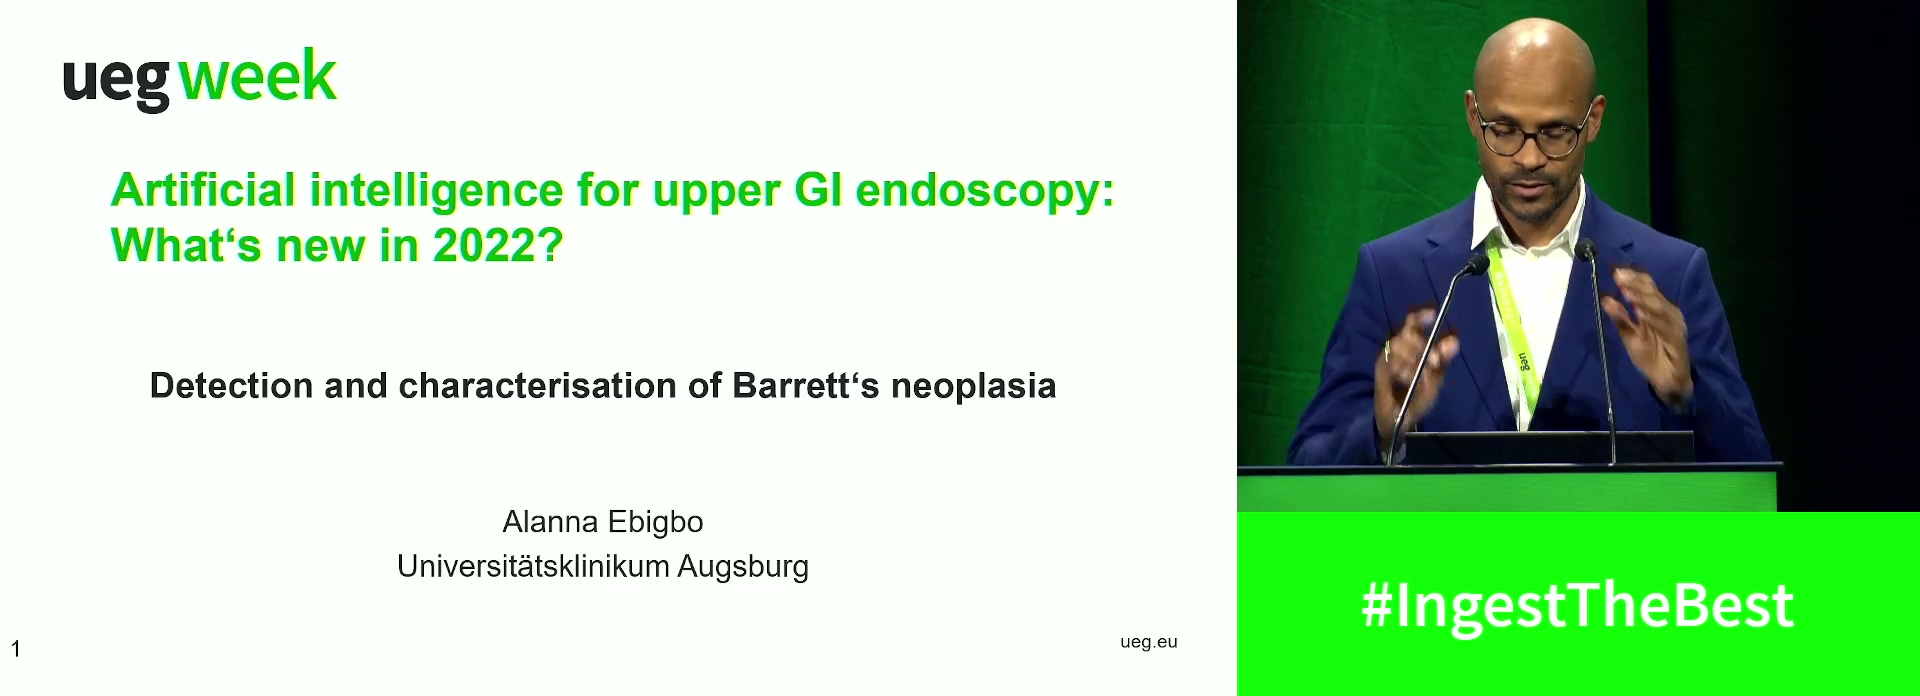 Detecton and characterisation of Barrett's neoplasia